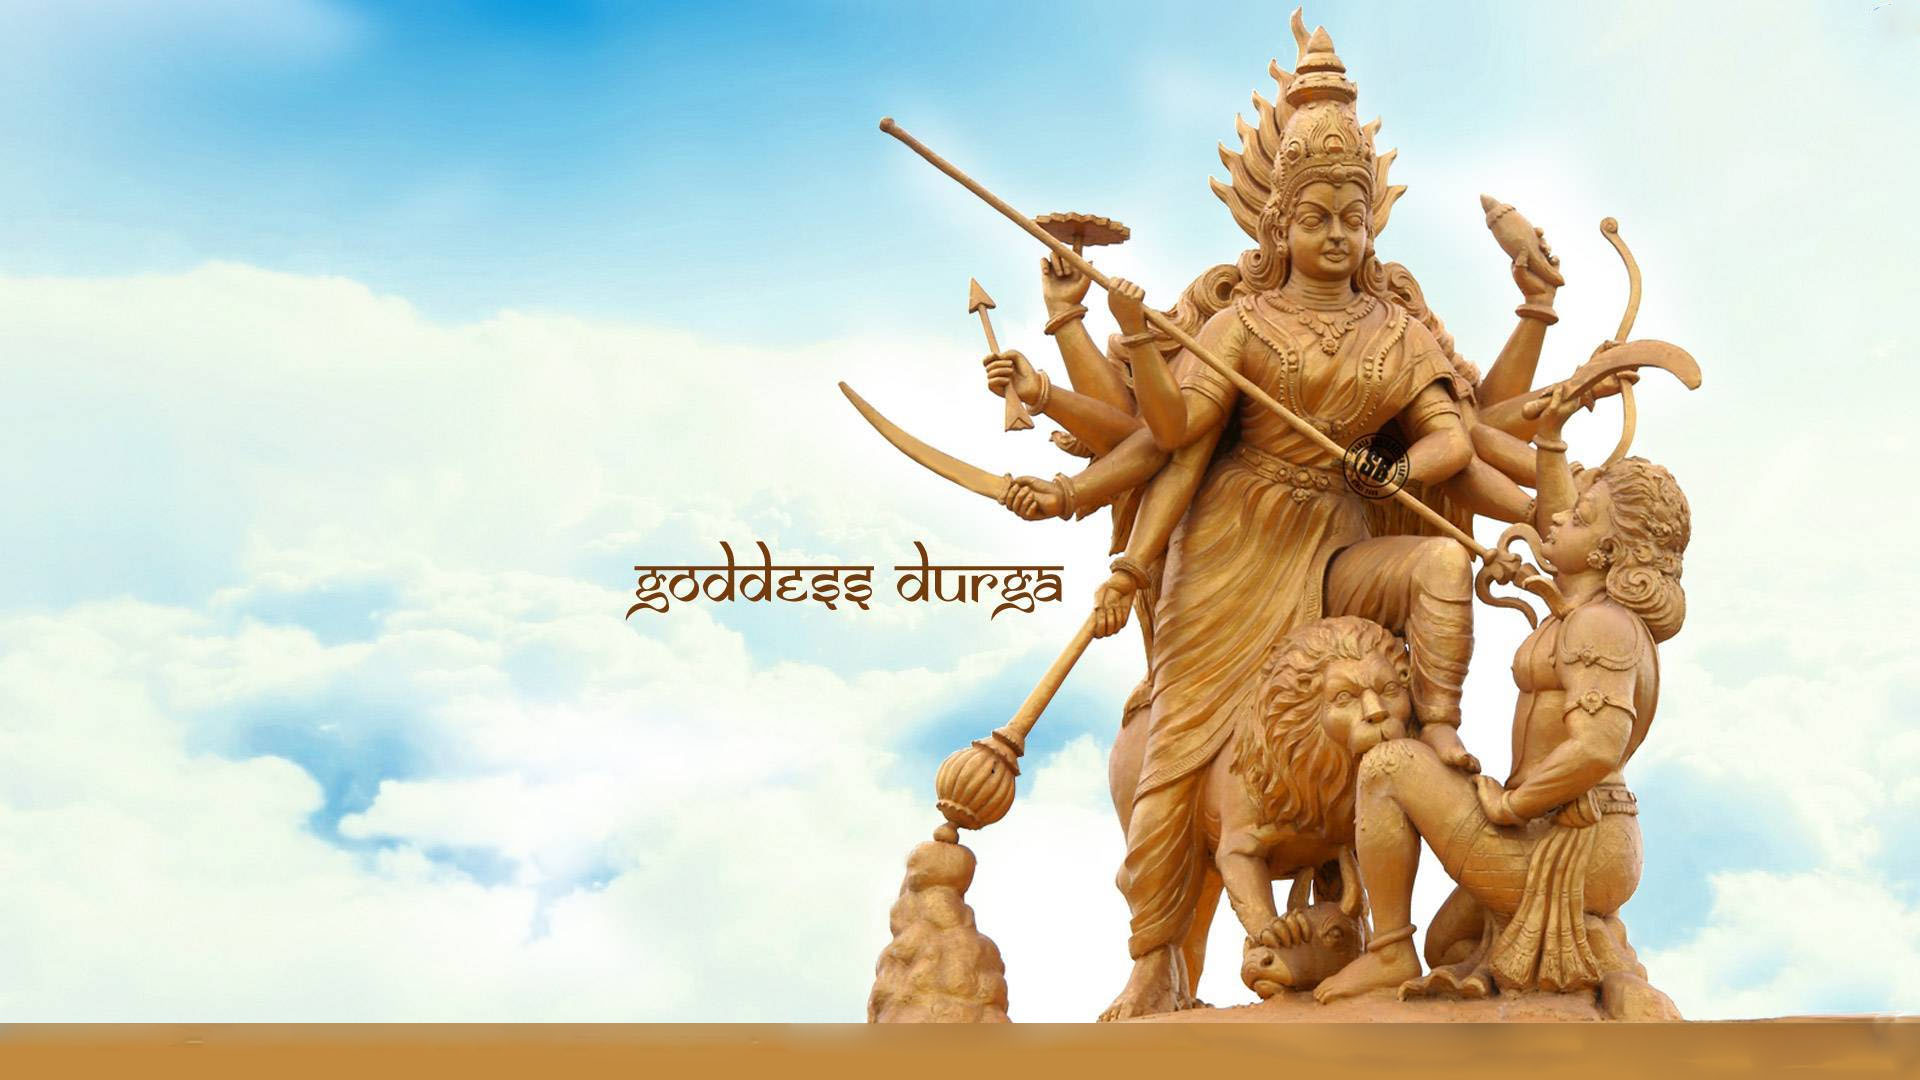 Maa Durga Images Free Download | Goddess Maa Durga